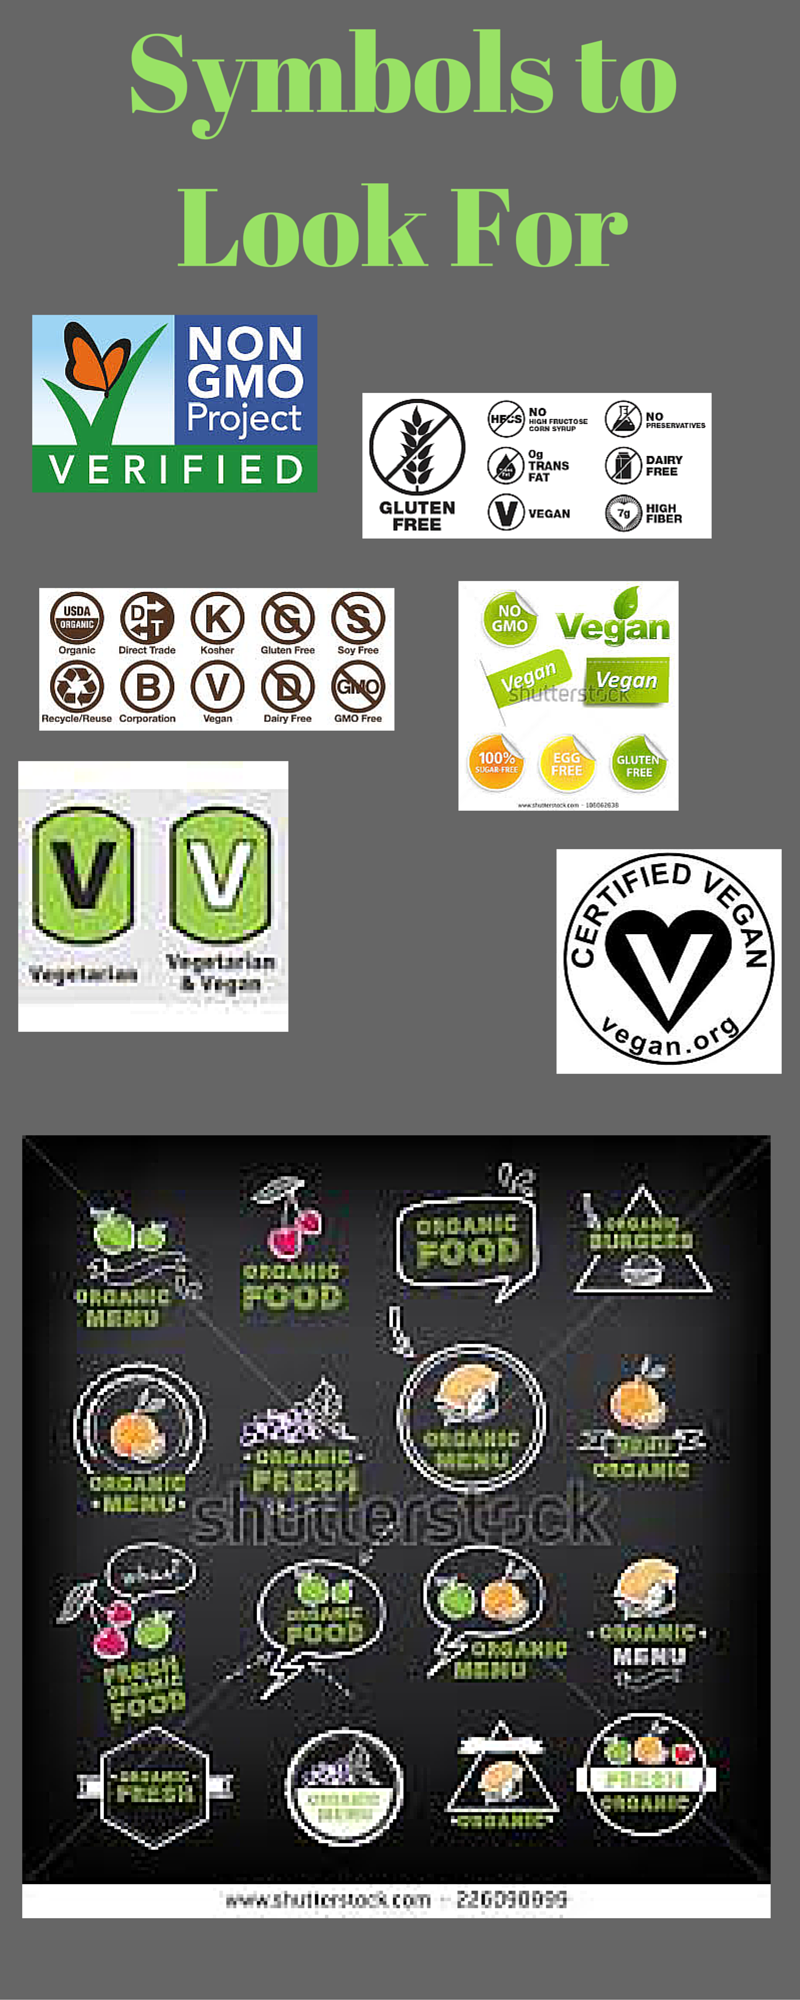 nutrition symbols